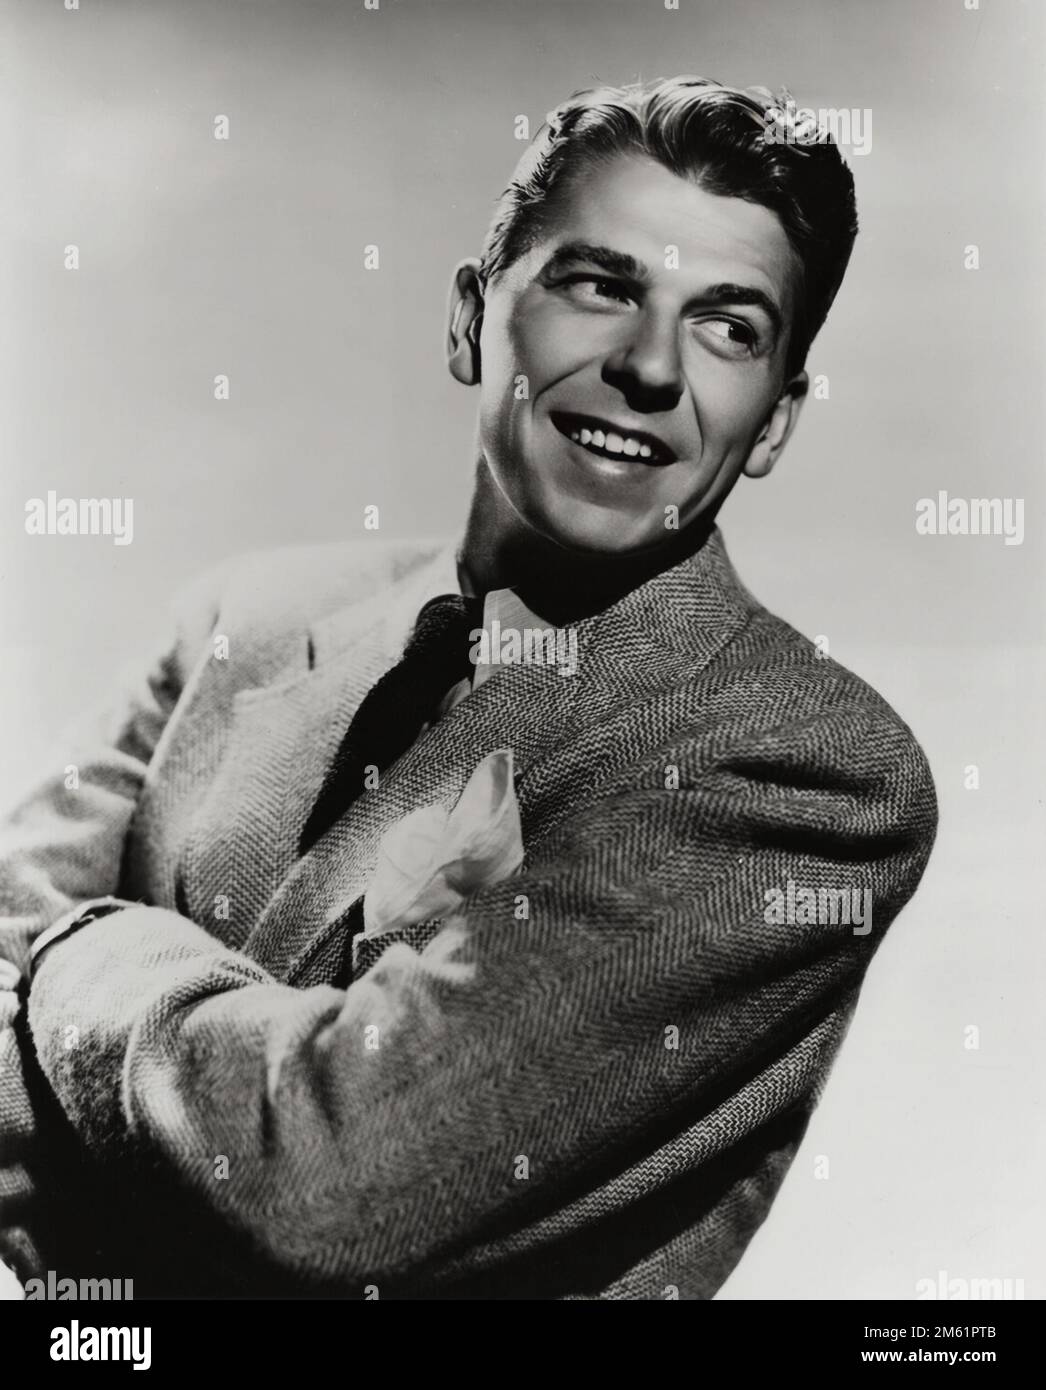 Ronald Reagan portrait 1940s Stock Photo